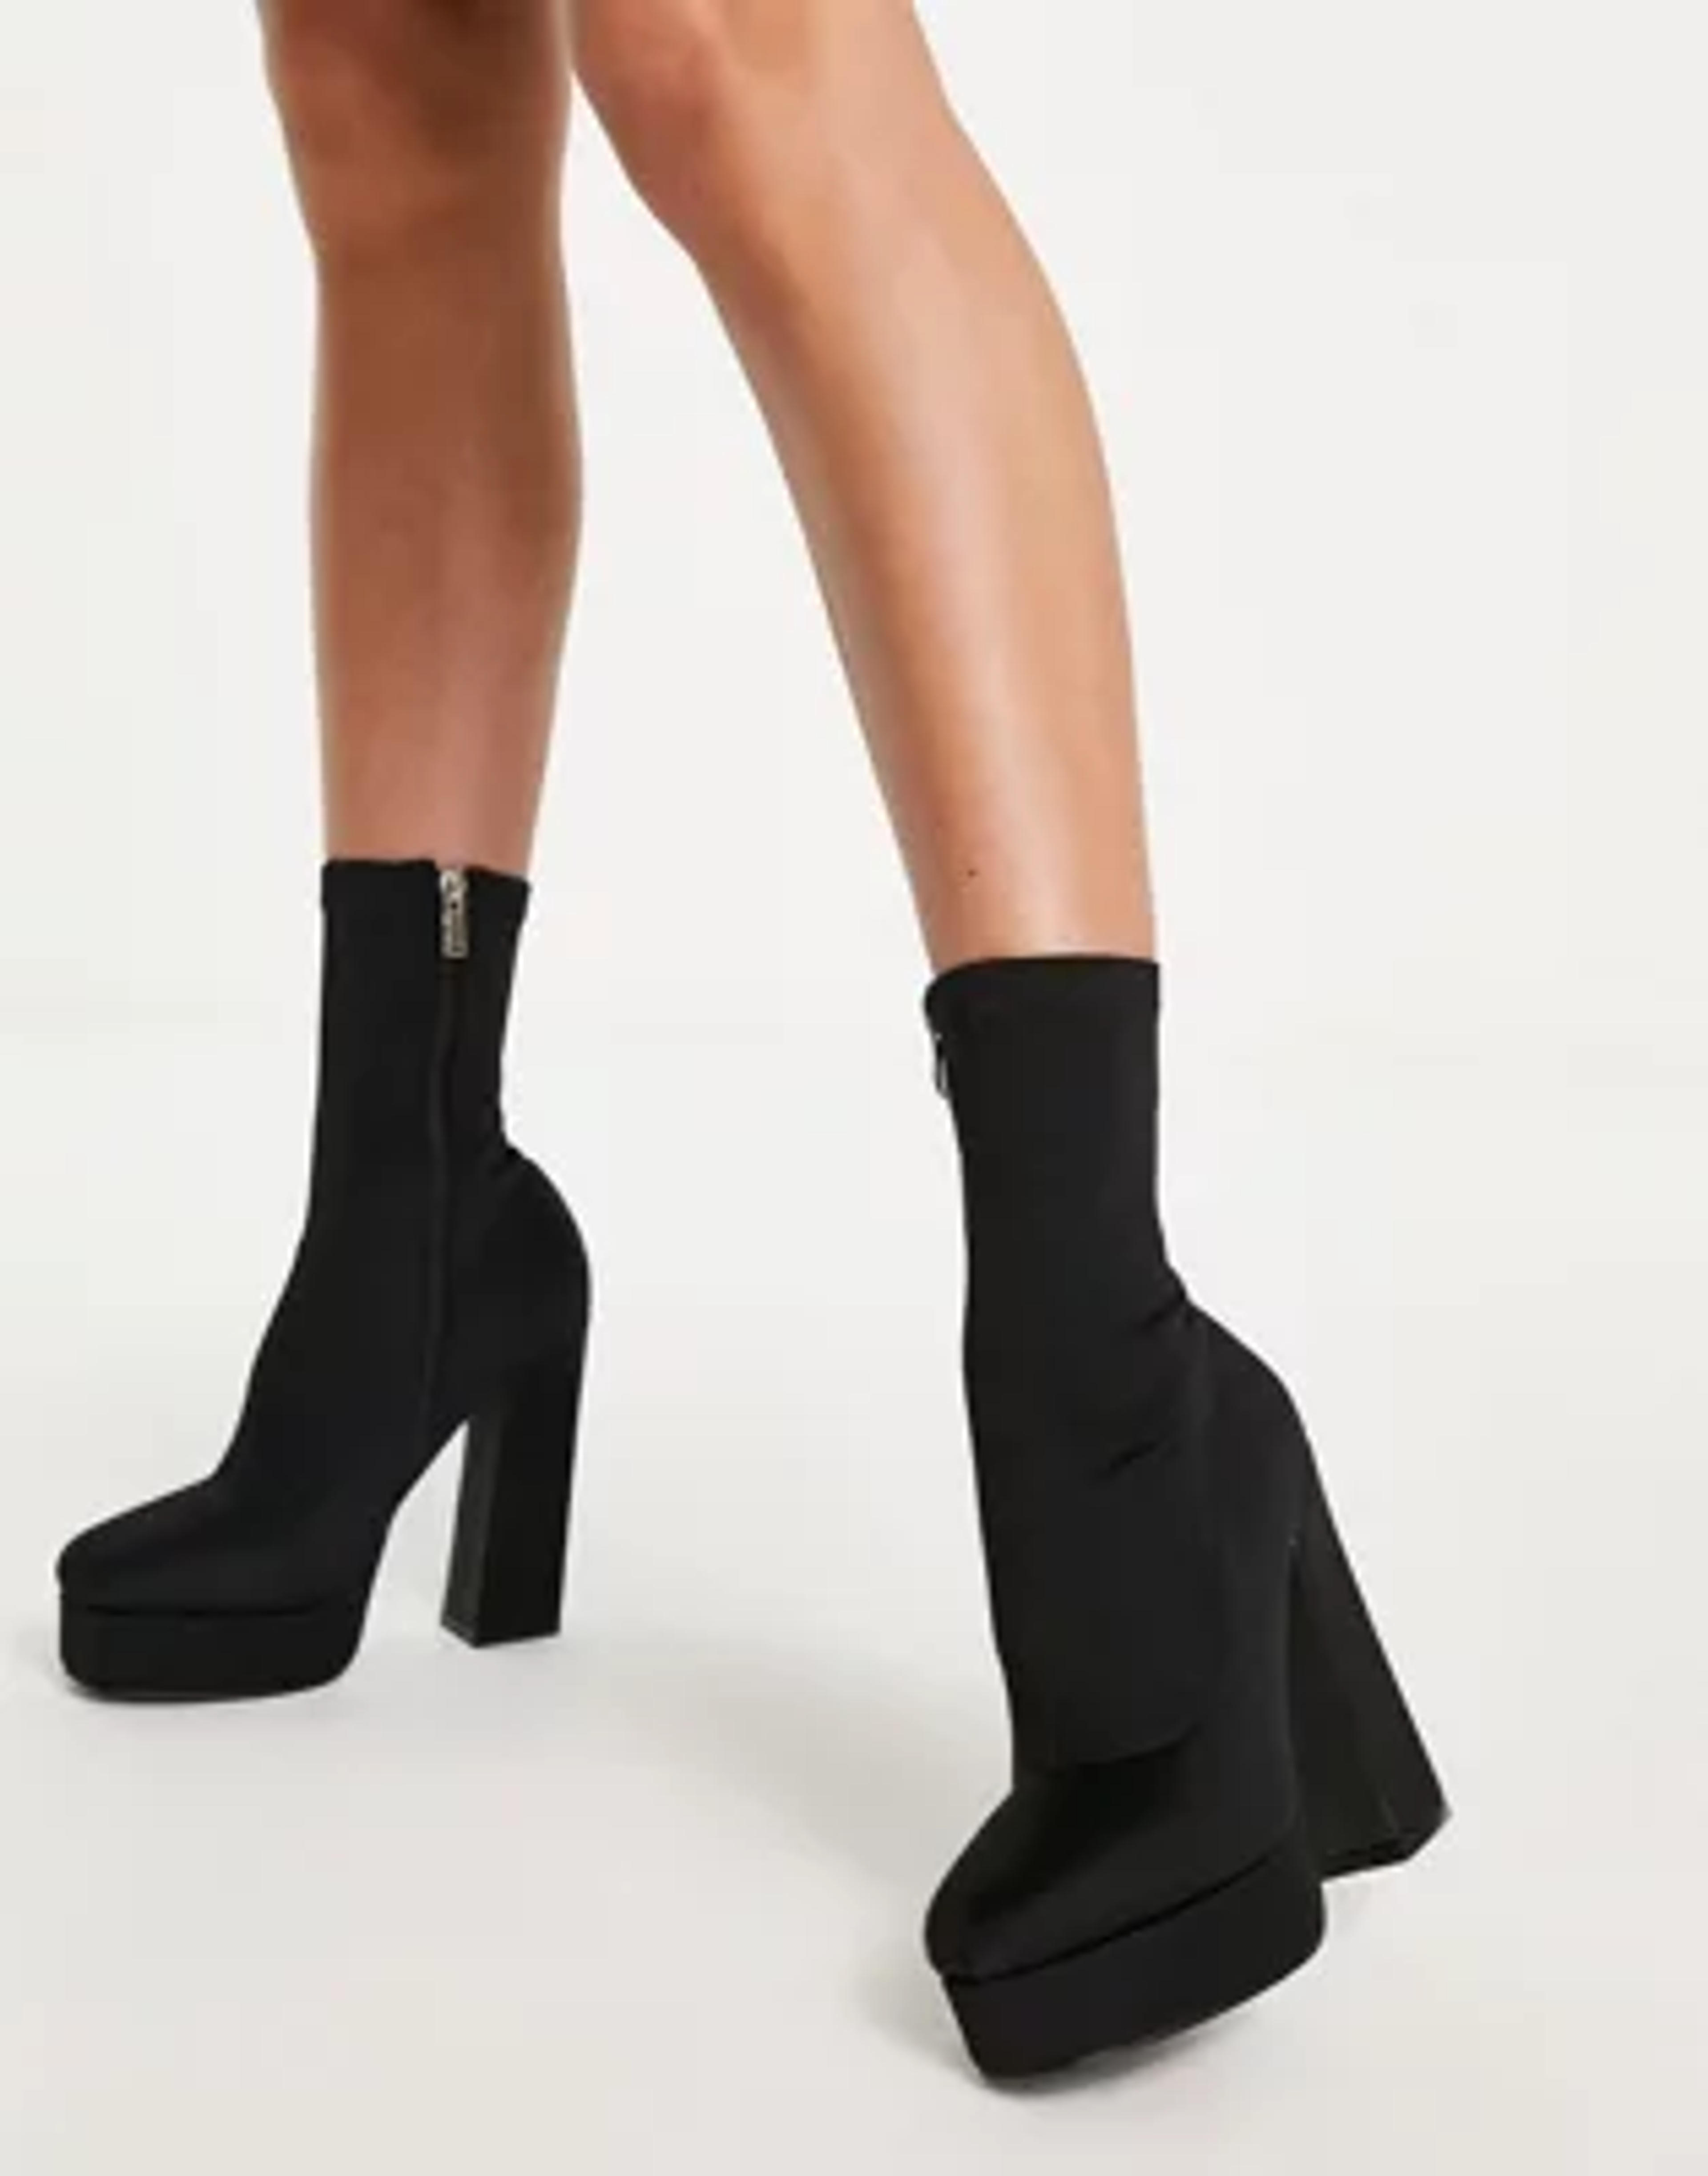 BEBO clancy heeled ankle boot in black | ASOS